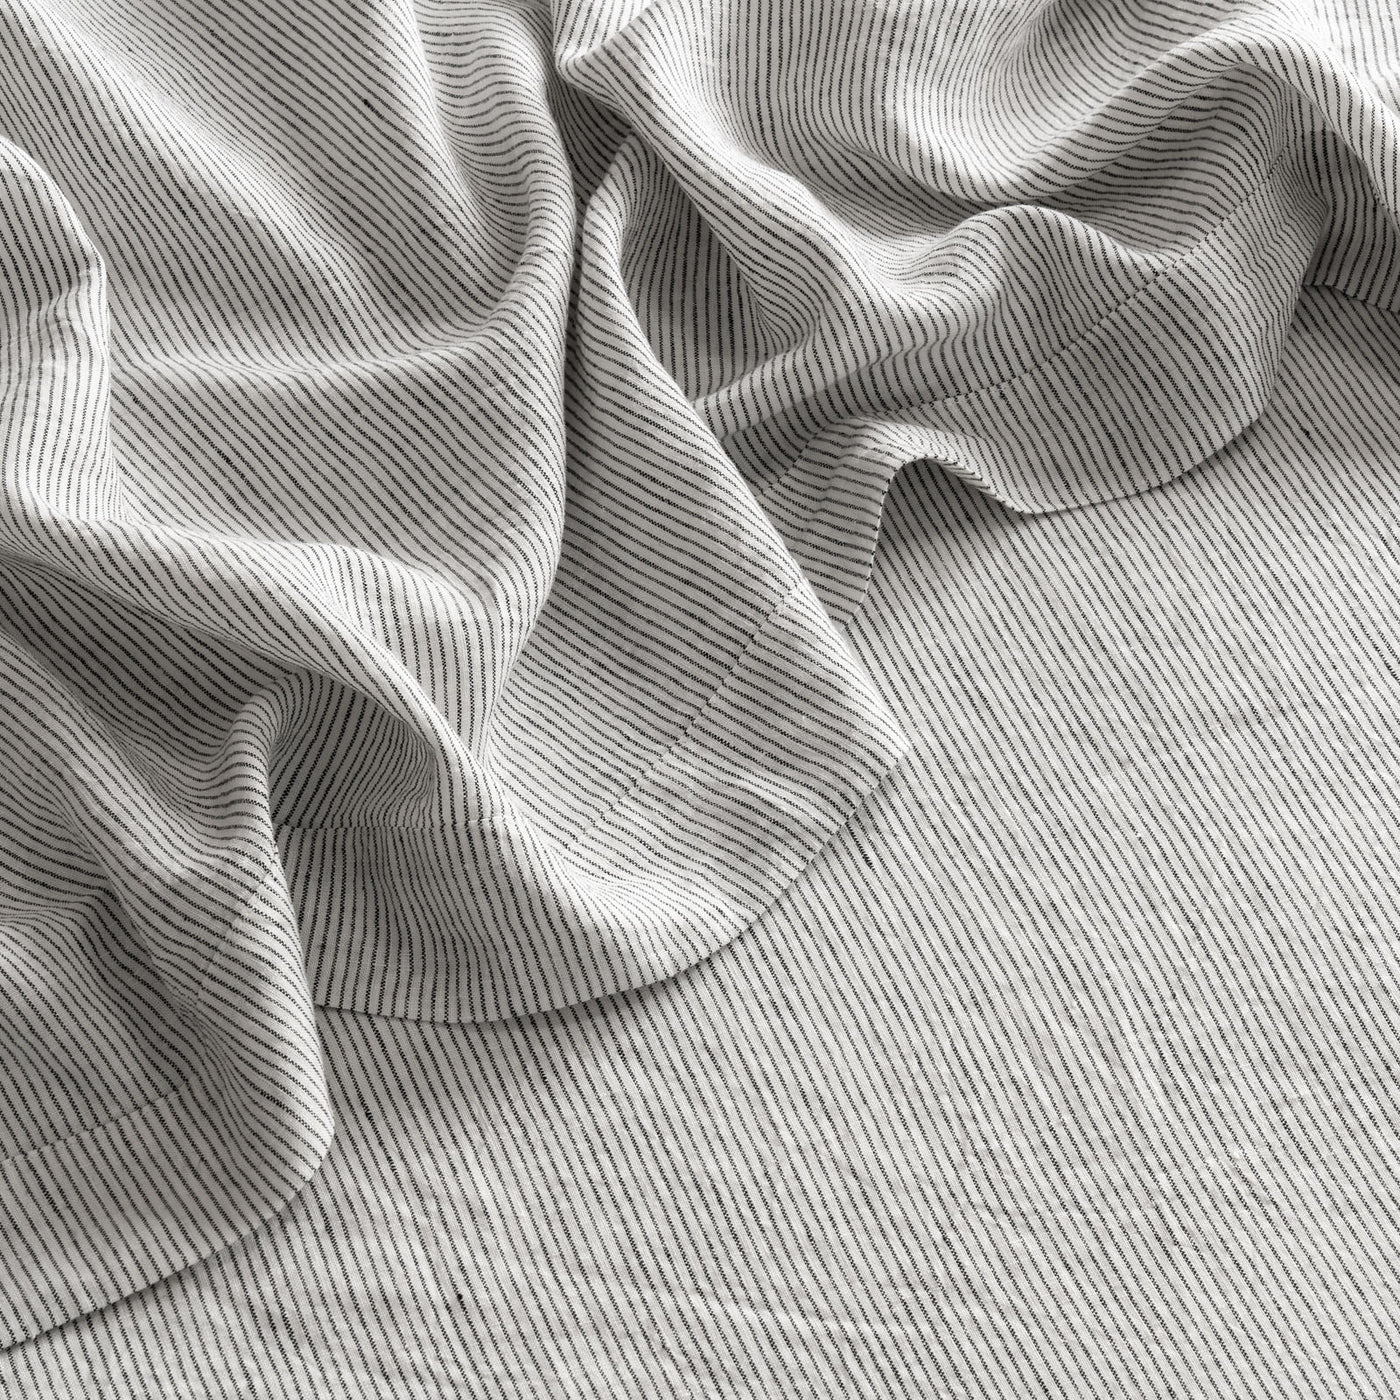 French Flax Linen Flat Sheet in Pinstripe